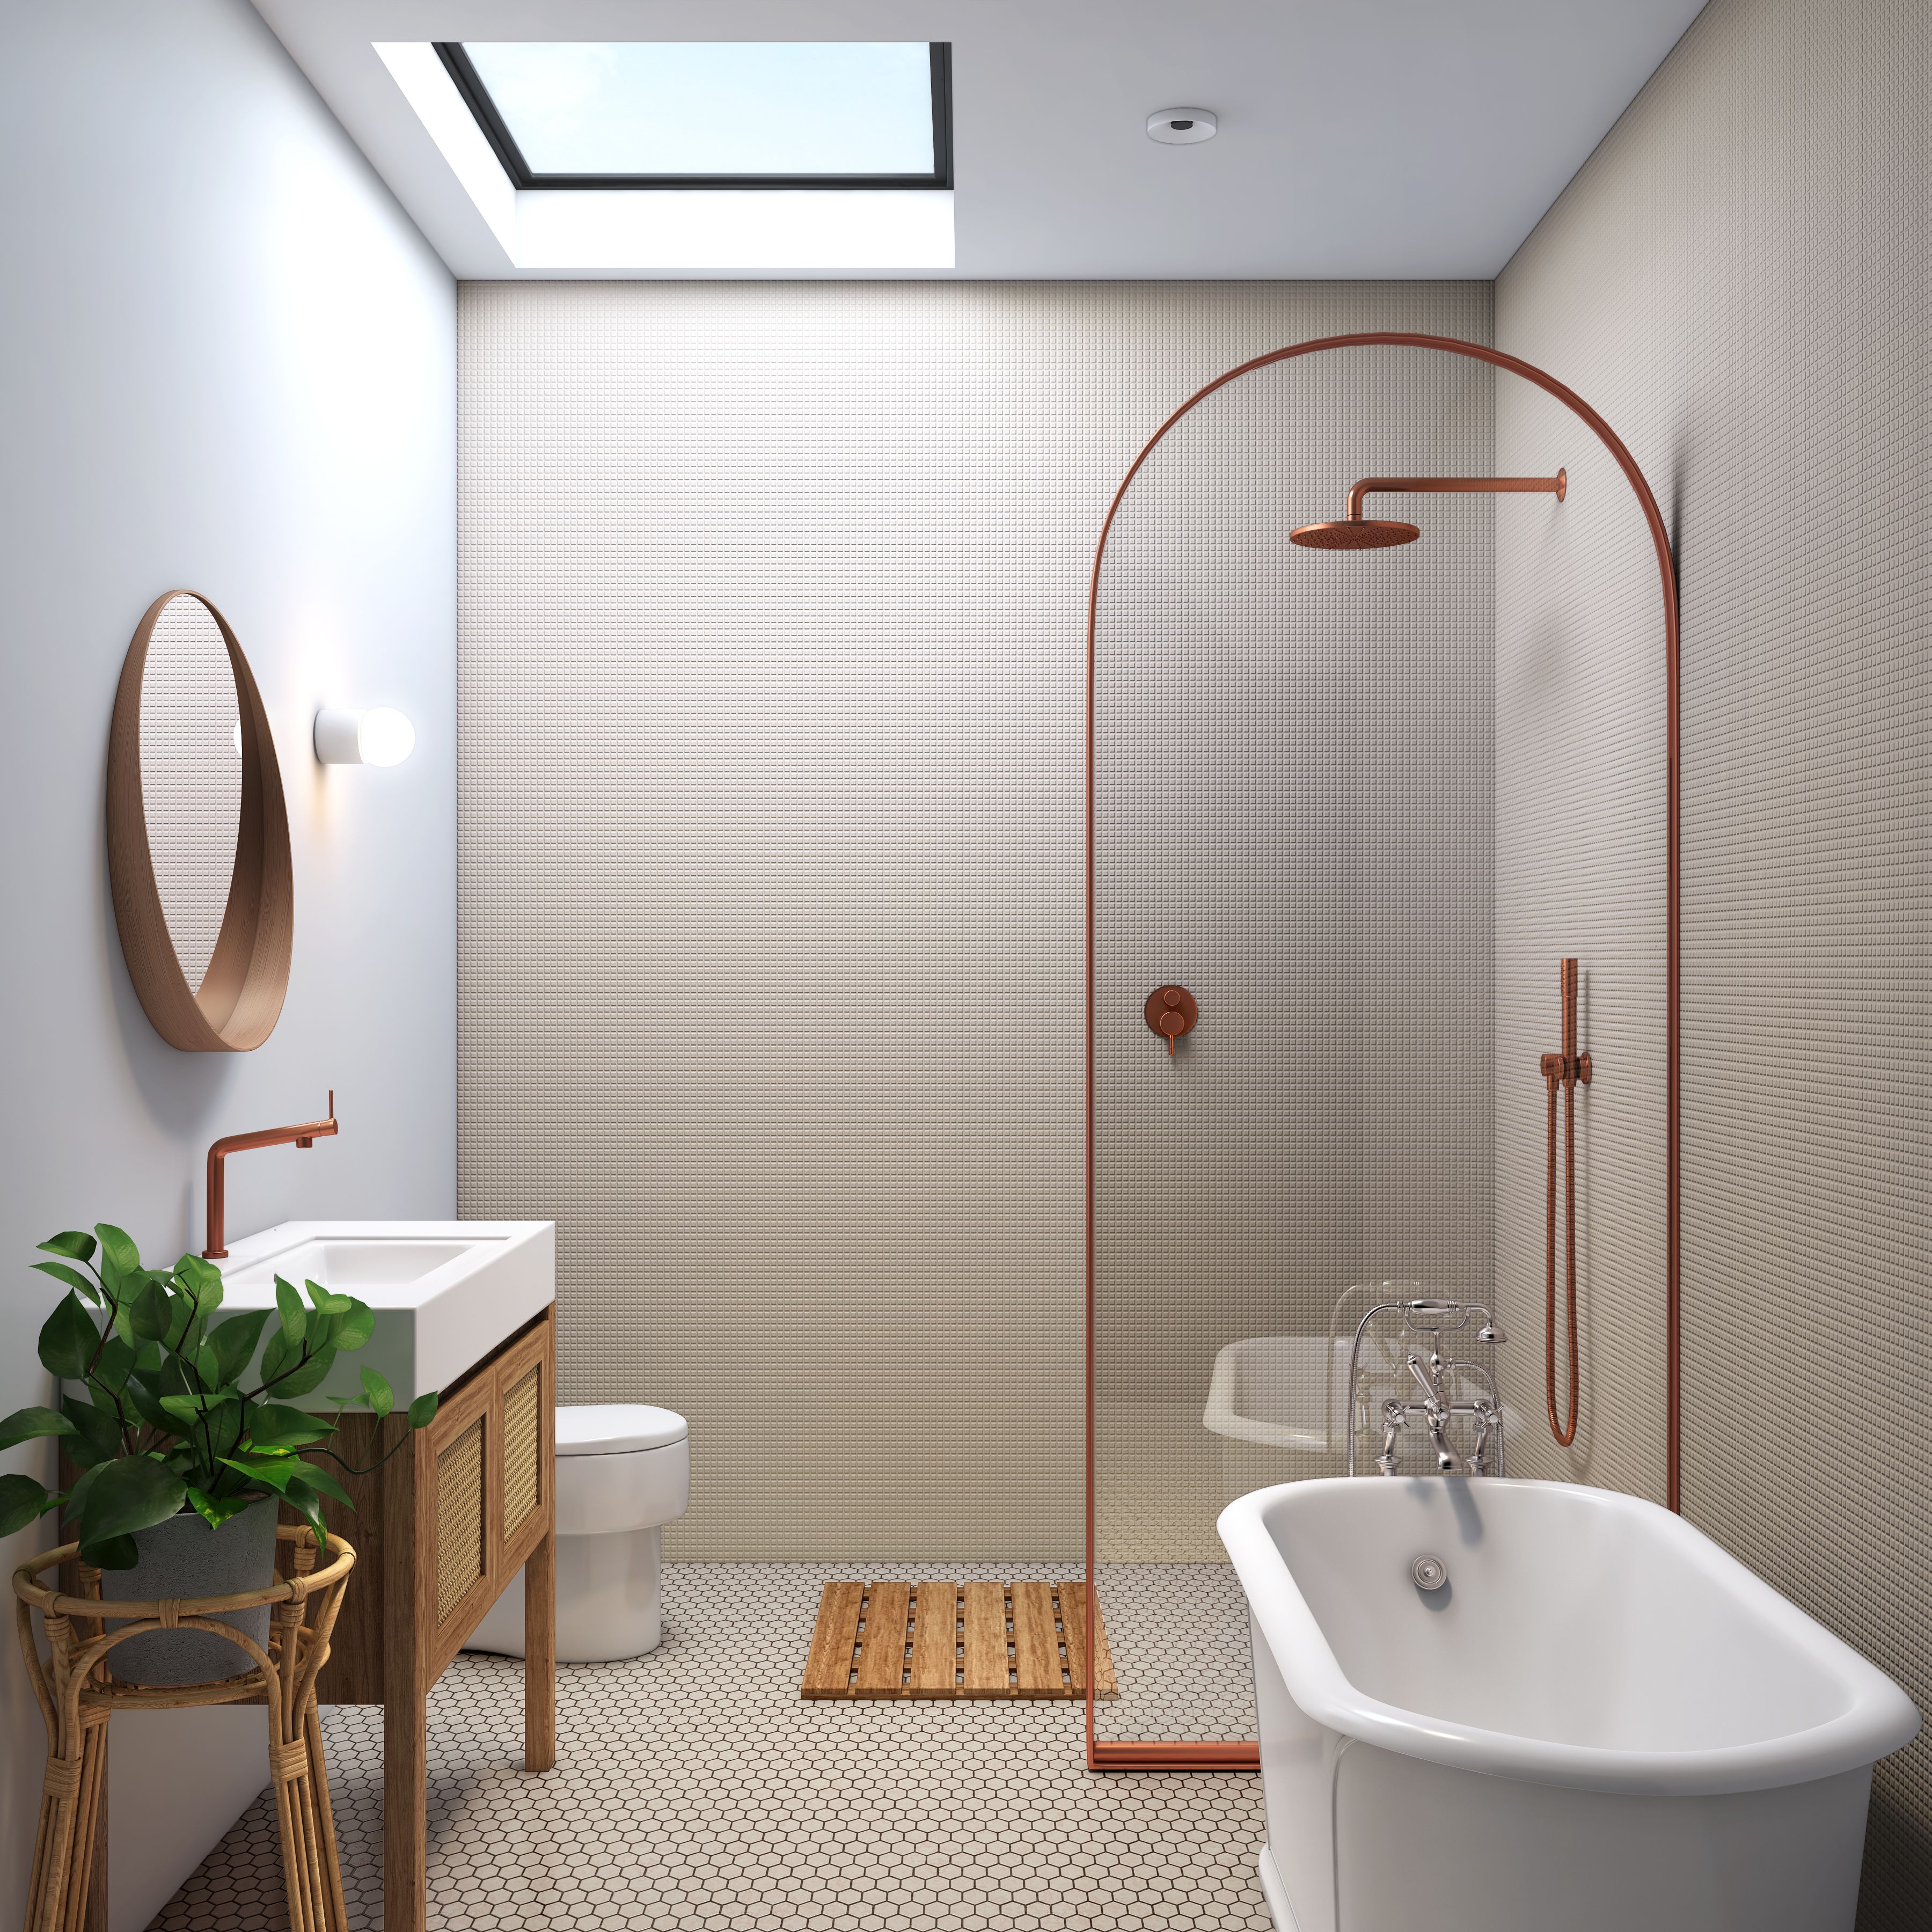 Minimal Bathroom Design With Wooden Unit